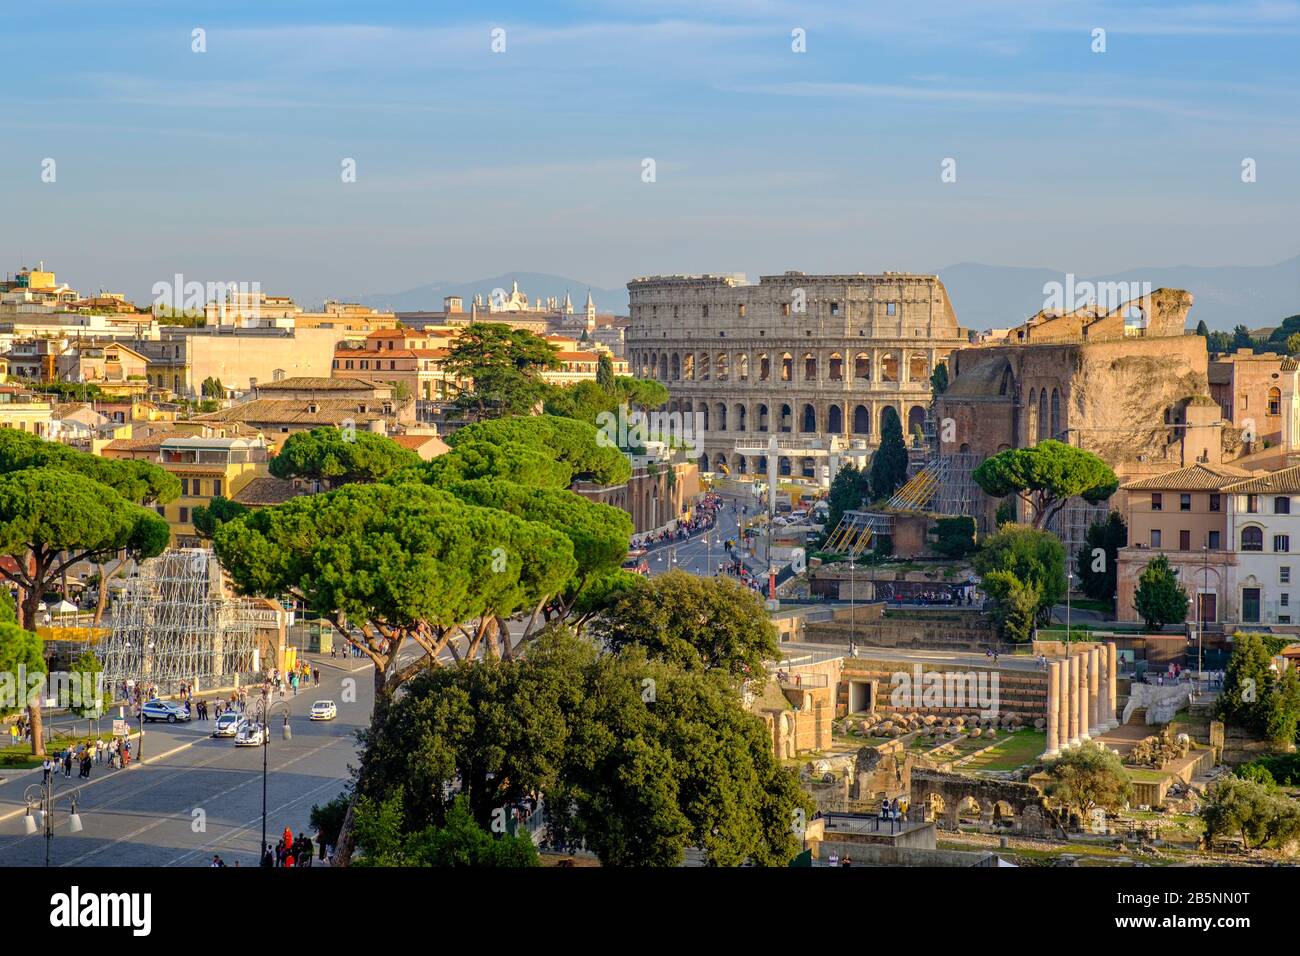 Gebäude des antiken Roms, Außenansicht des Kolosseums, Kolosseum, Flavisches Amphitheater, Forum Romanum, Rom, Italien Stockfoto